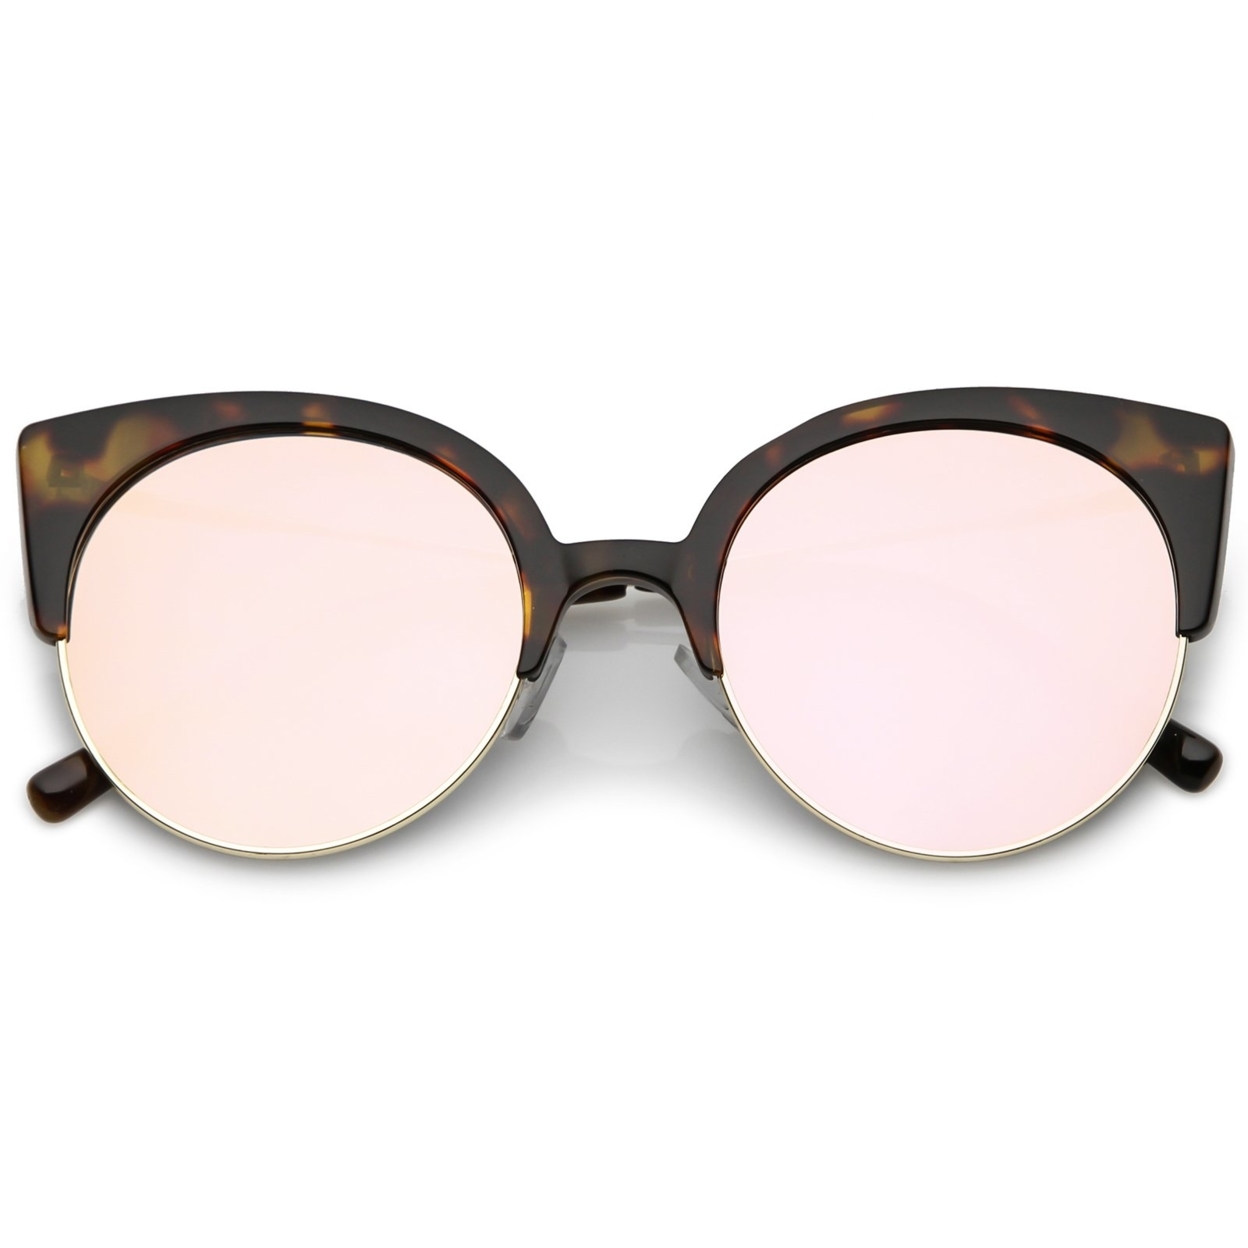 Women's Half Frame Cat Eye Sunglasses Ultra Slim Arms Mirrored Round Flat Lens 53mm - Black Gold / Purple Mirror